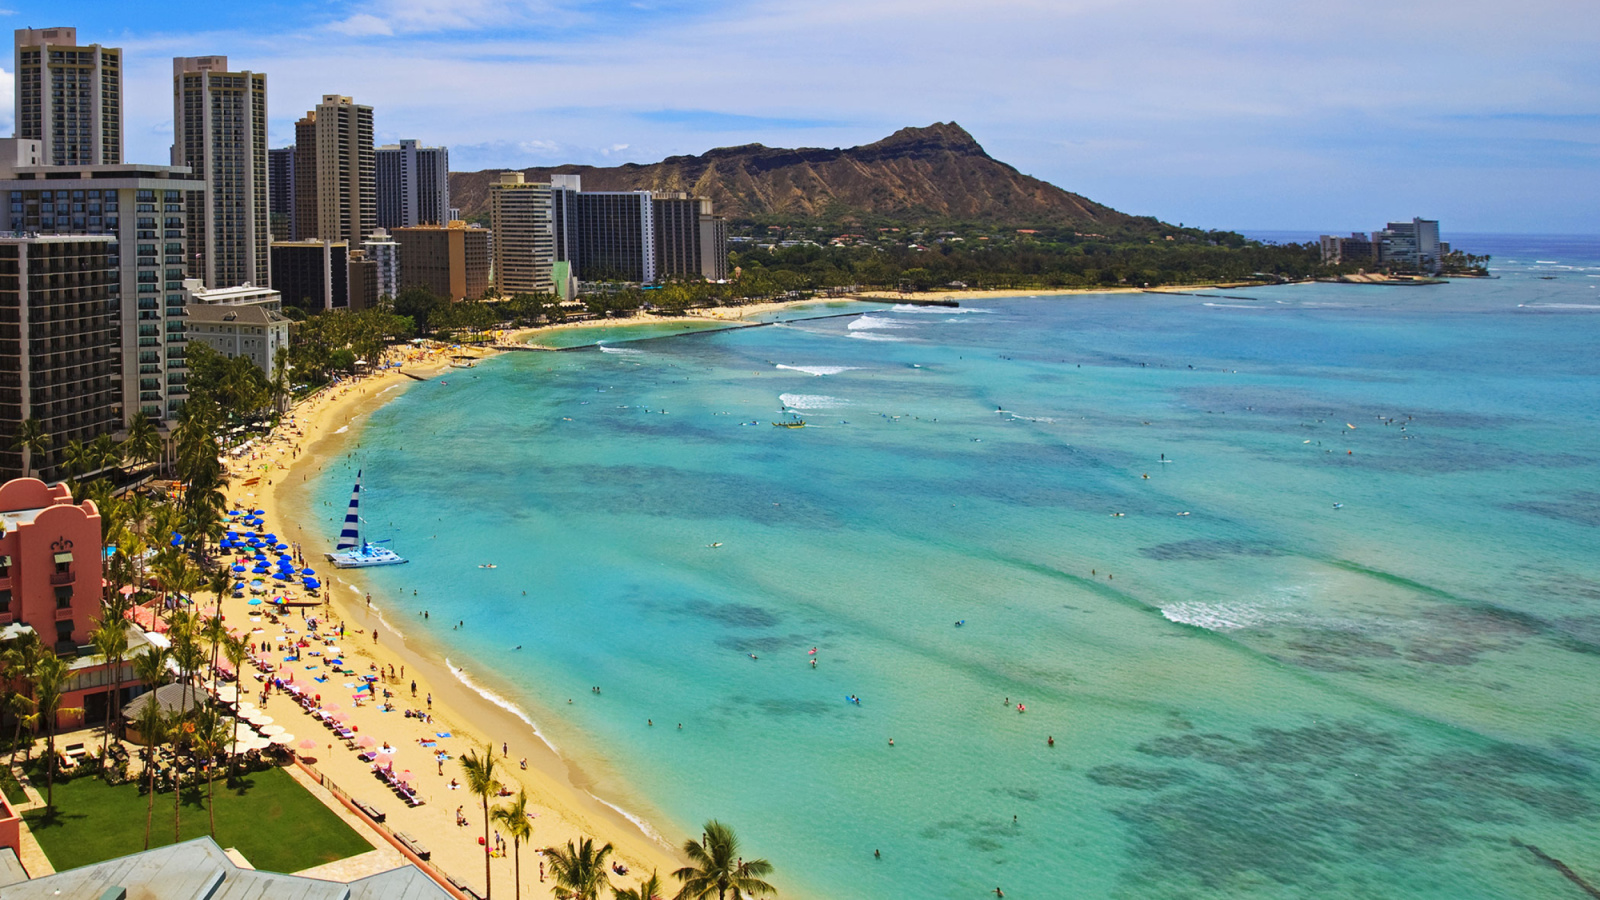 Top 5 Things to Do in Waikiki